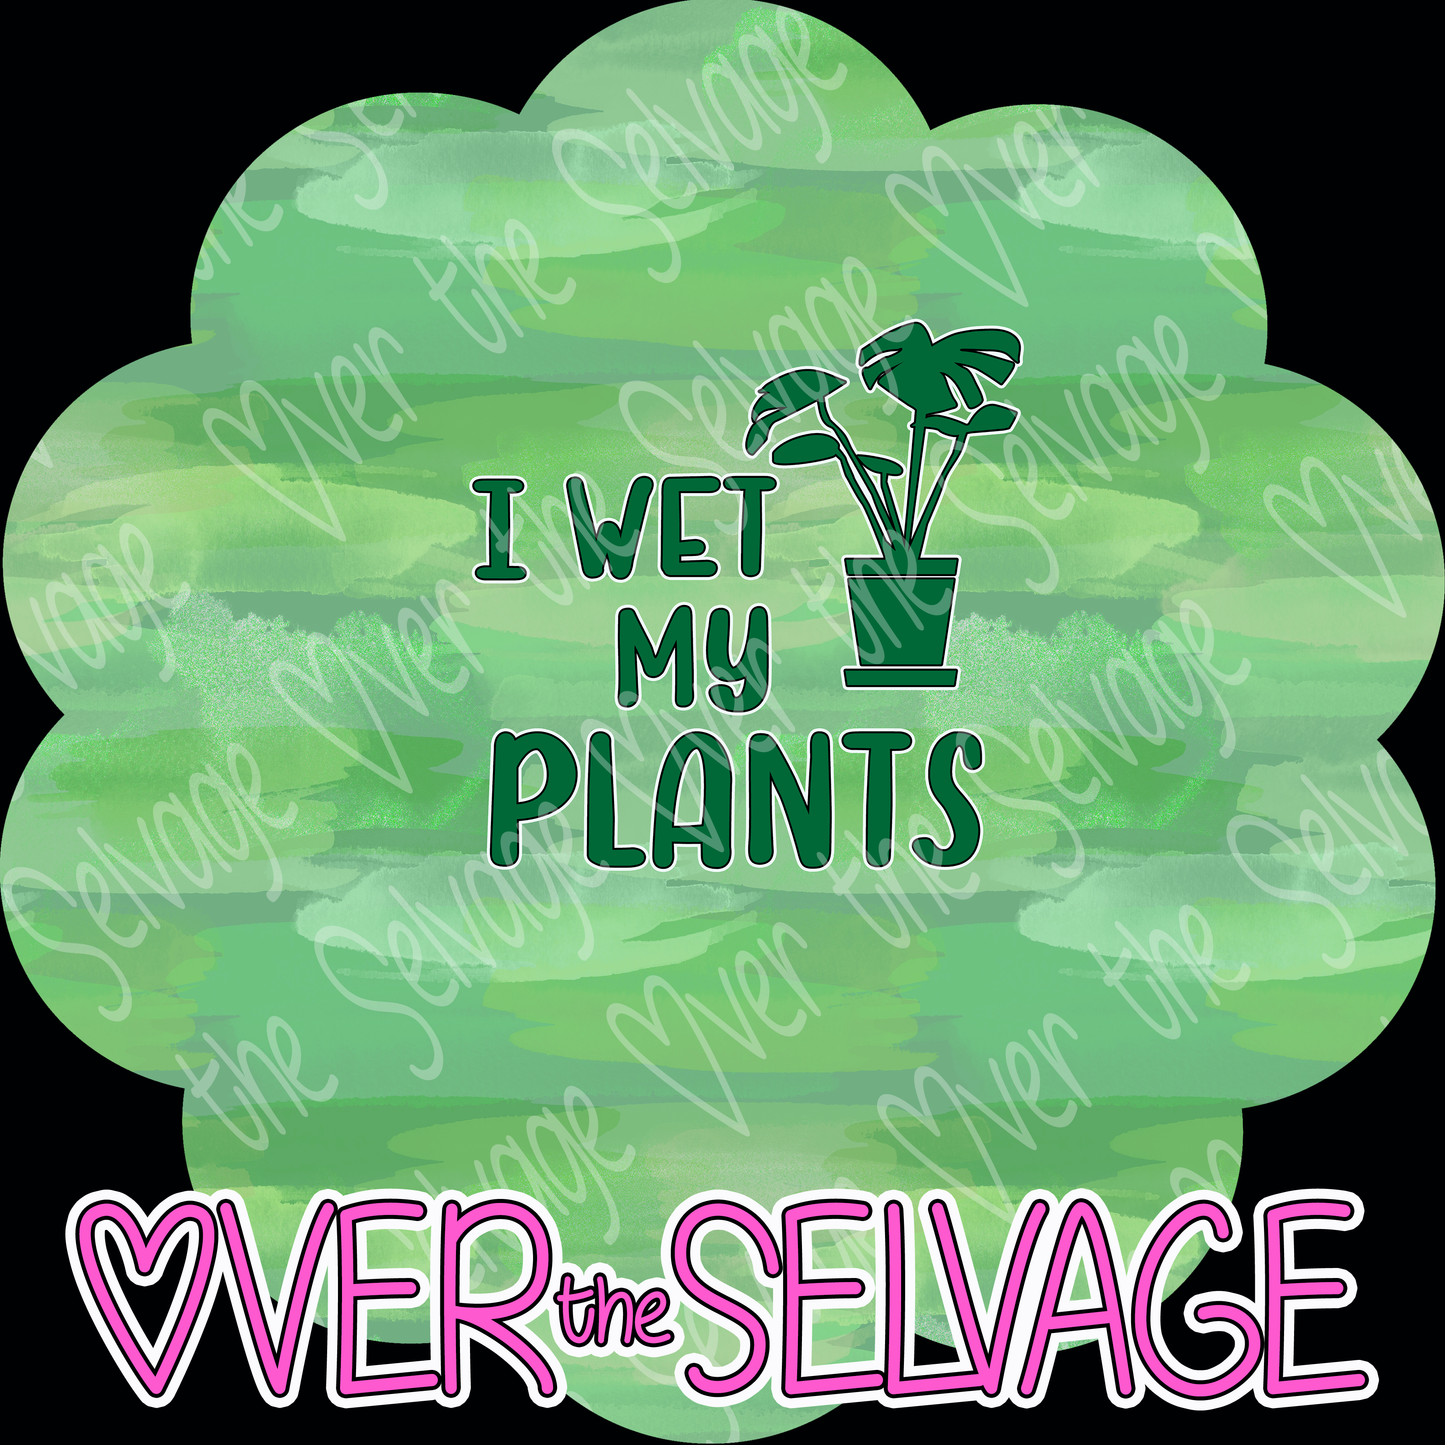 I Wet My PlantsLARGE Panel R9Strikes